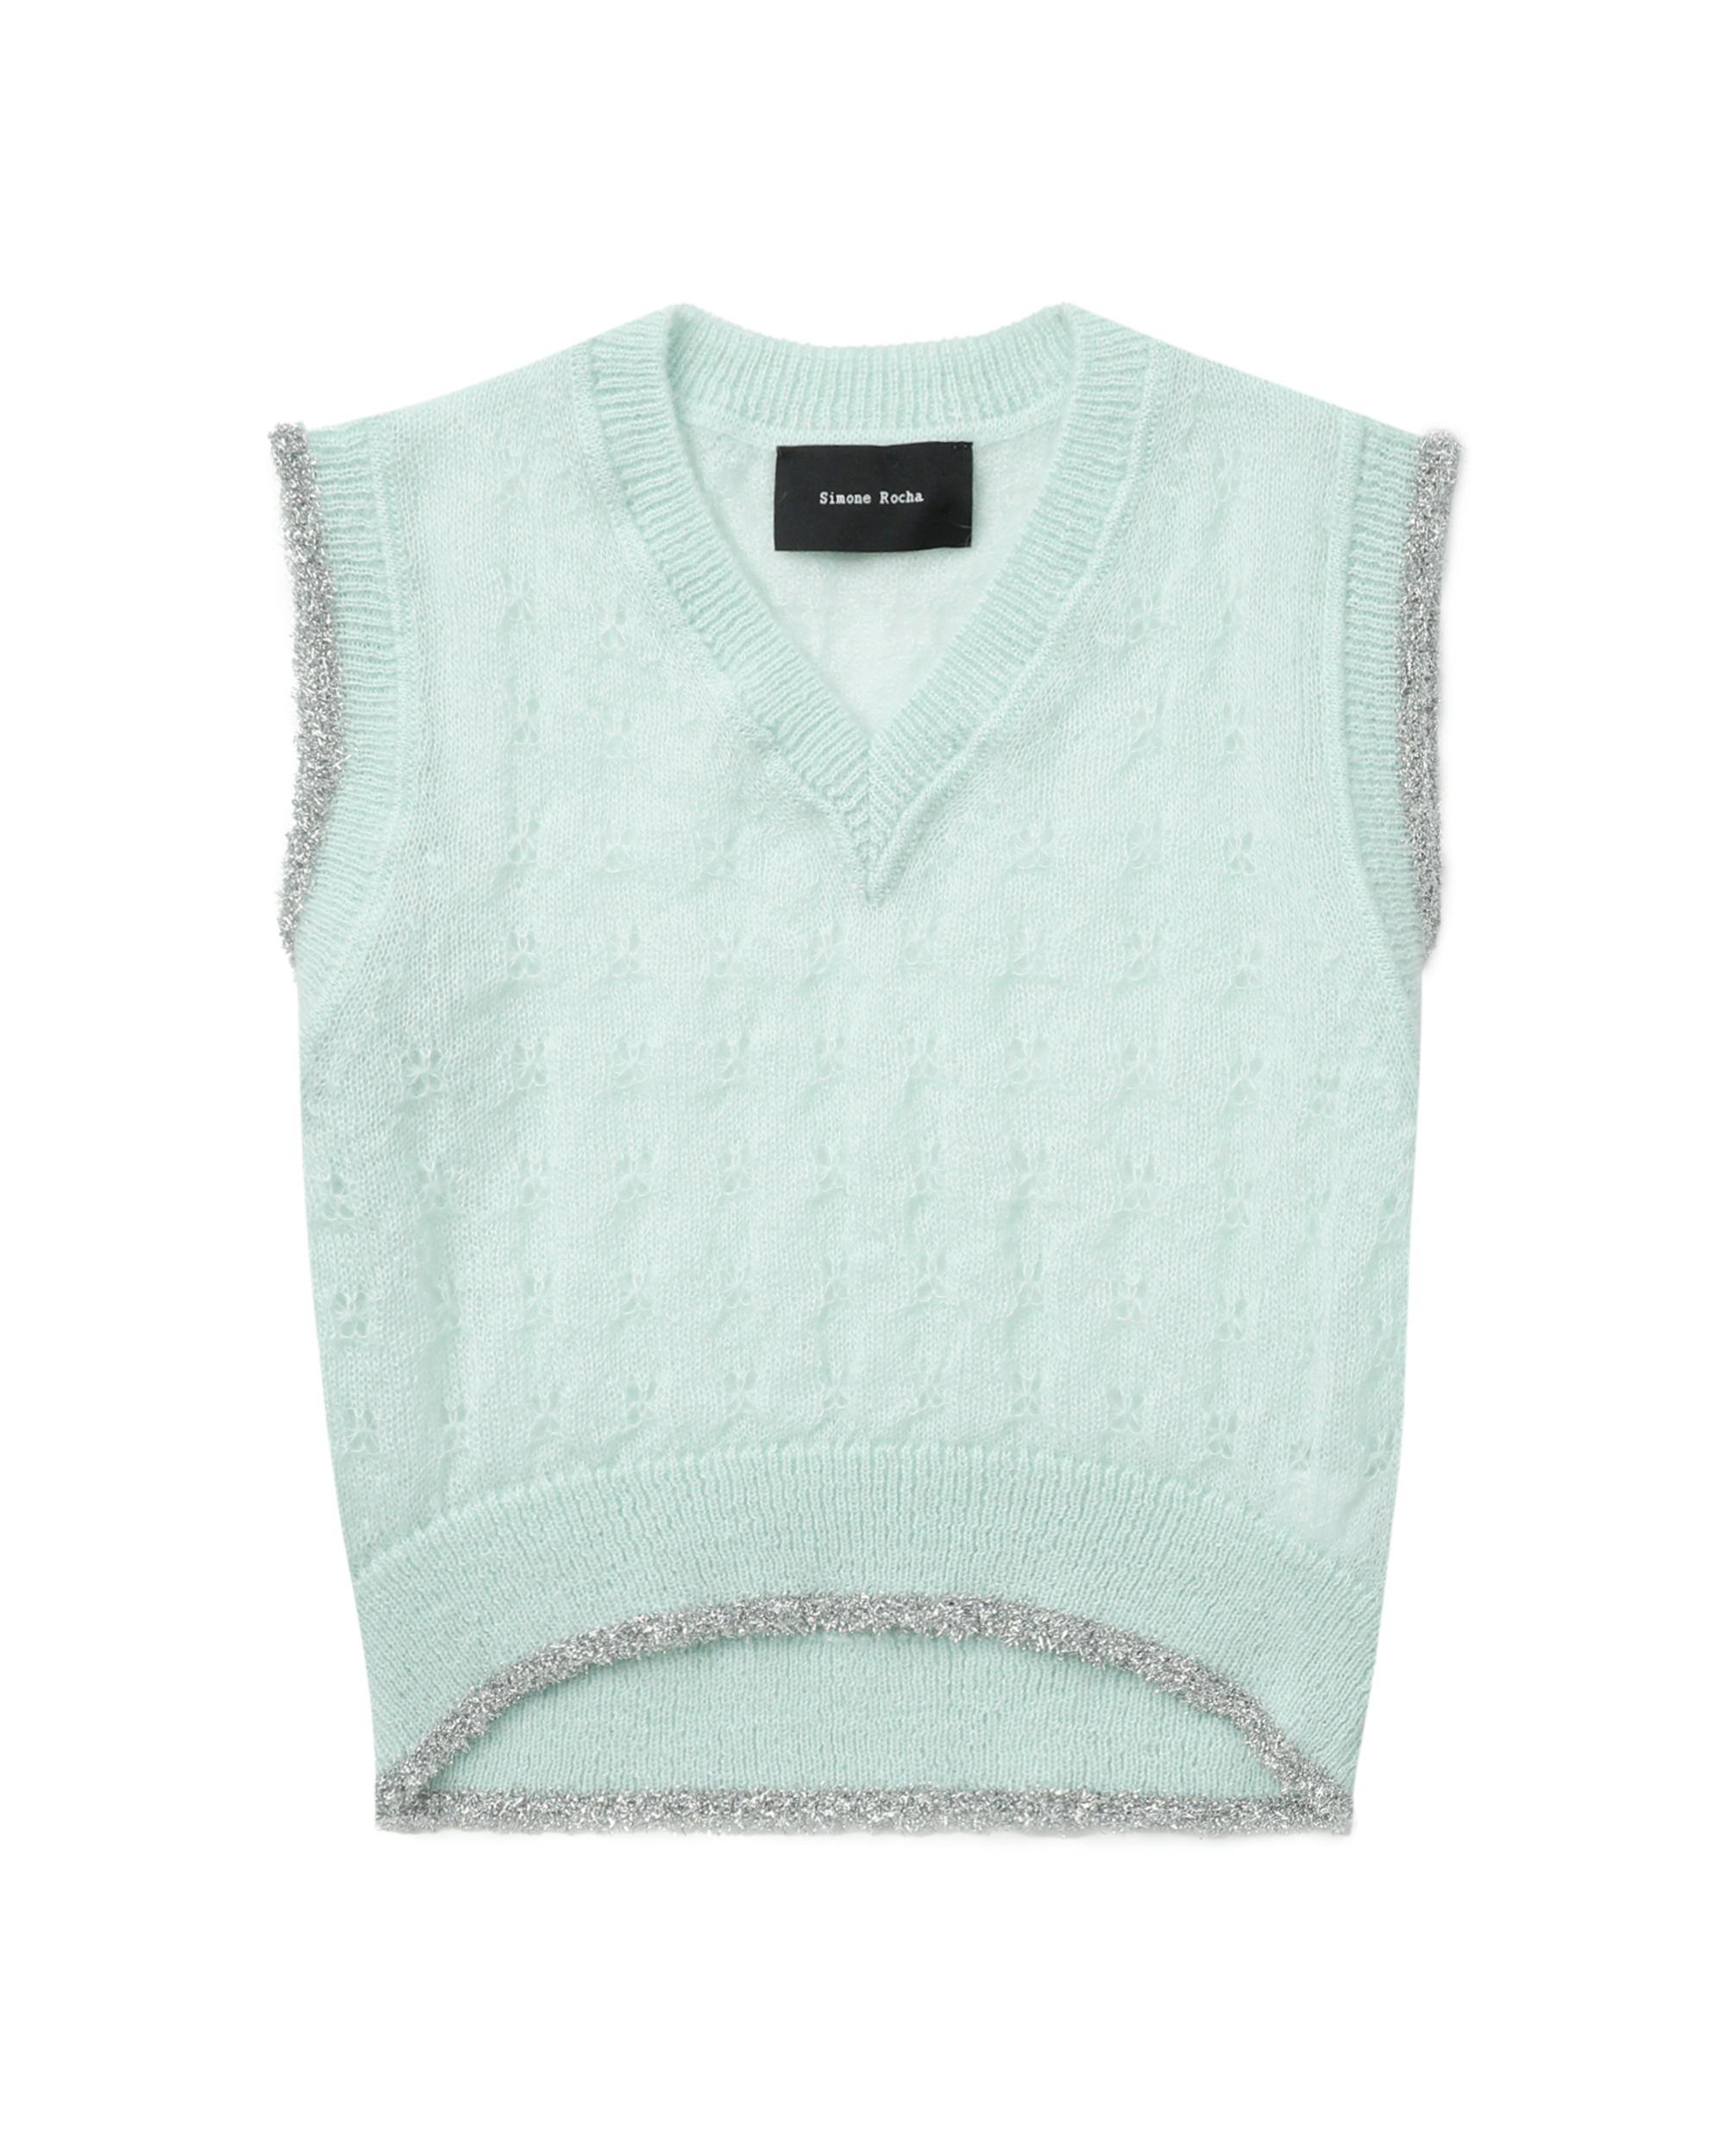 Tinsel knit vest by SIMONE ROCHA